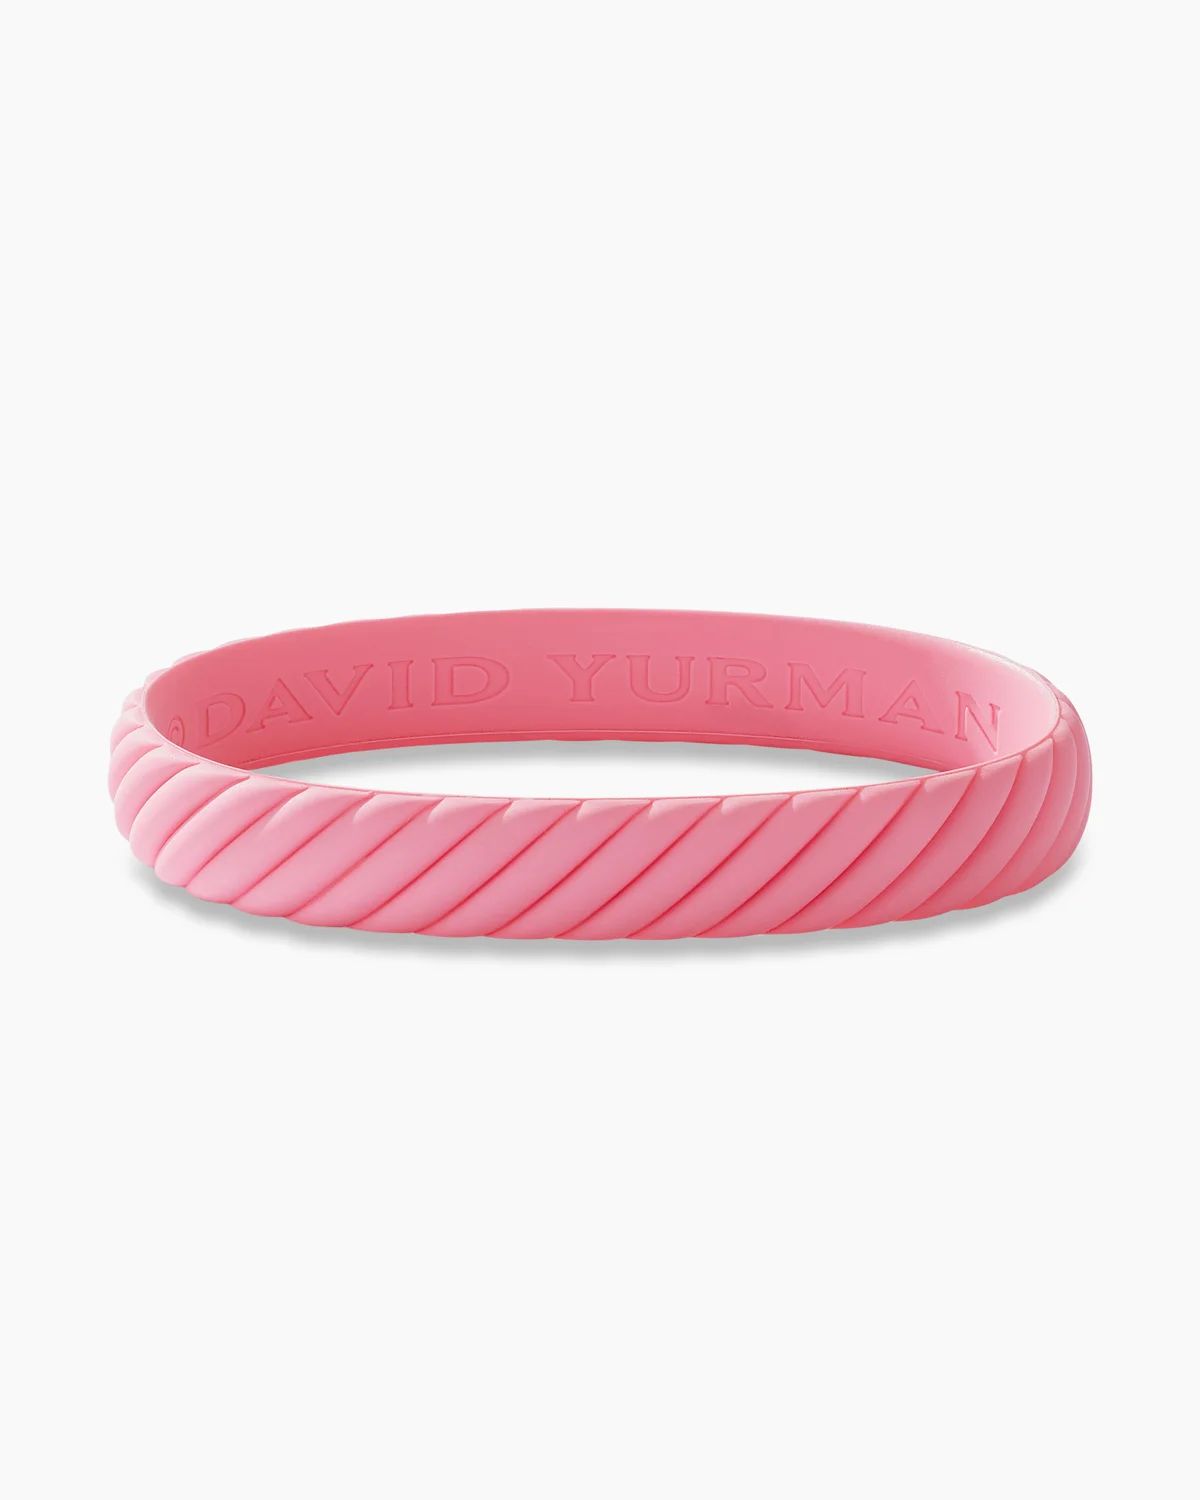 David Yurman | Cable Pink Rubber Bracelet, 10mm | David Yurman